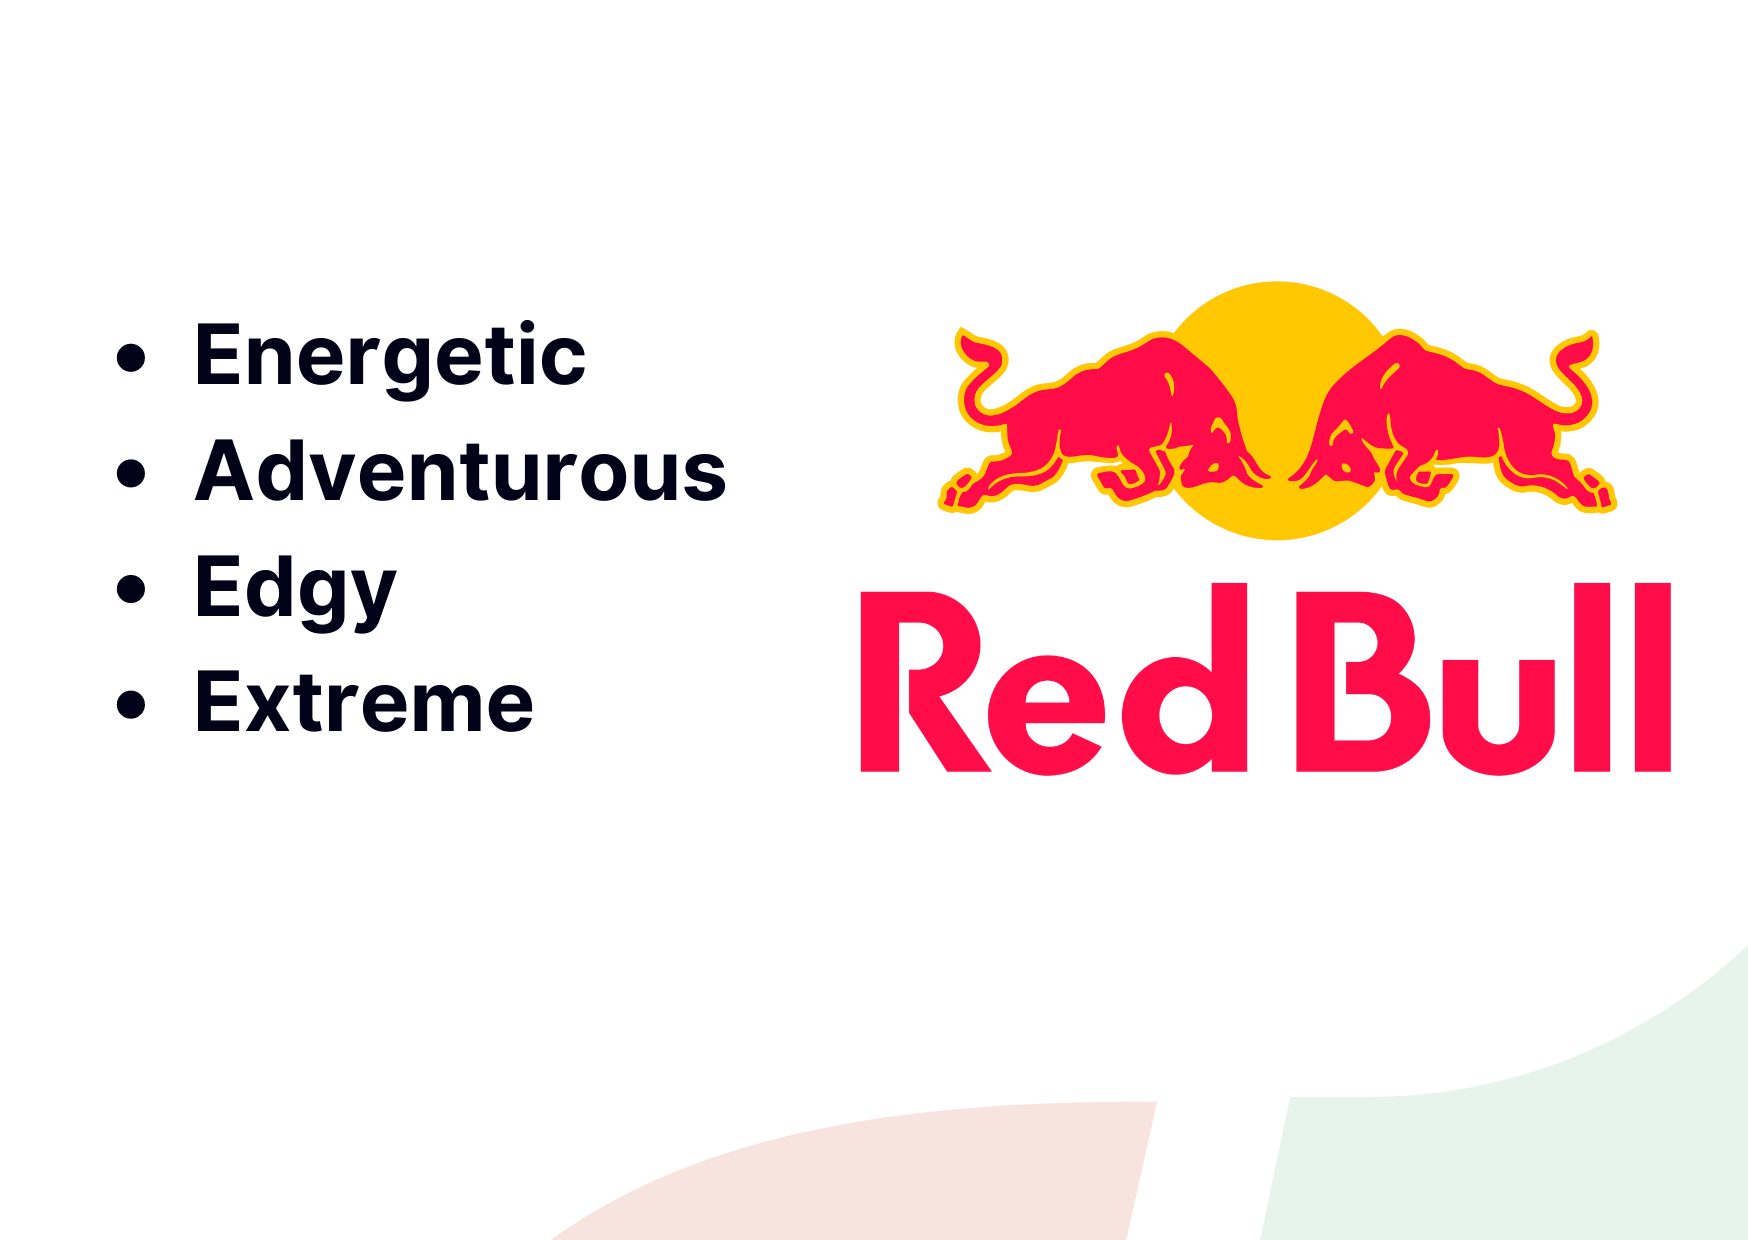 Red bull's brand image